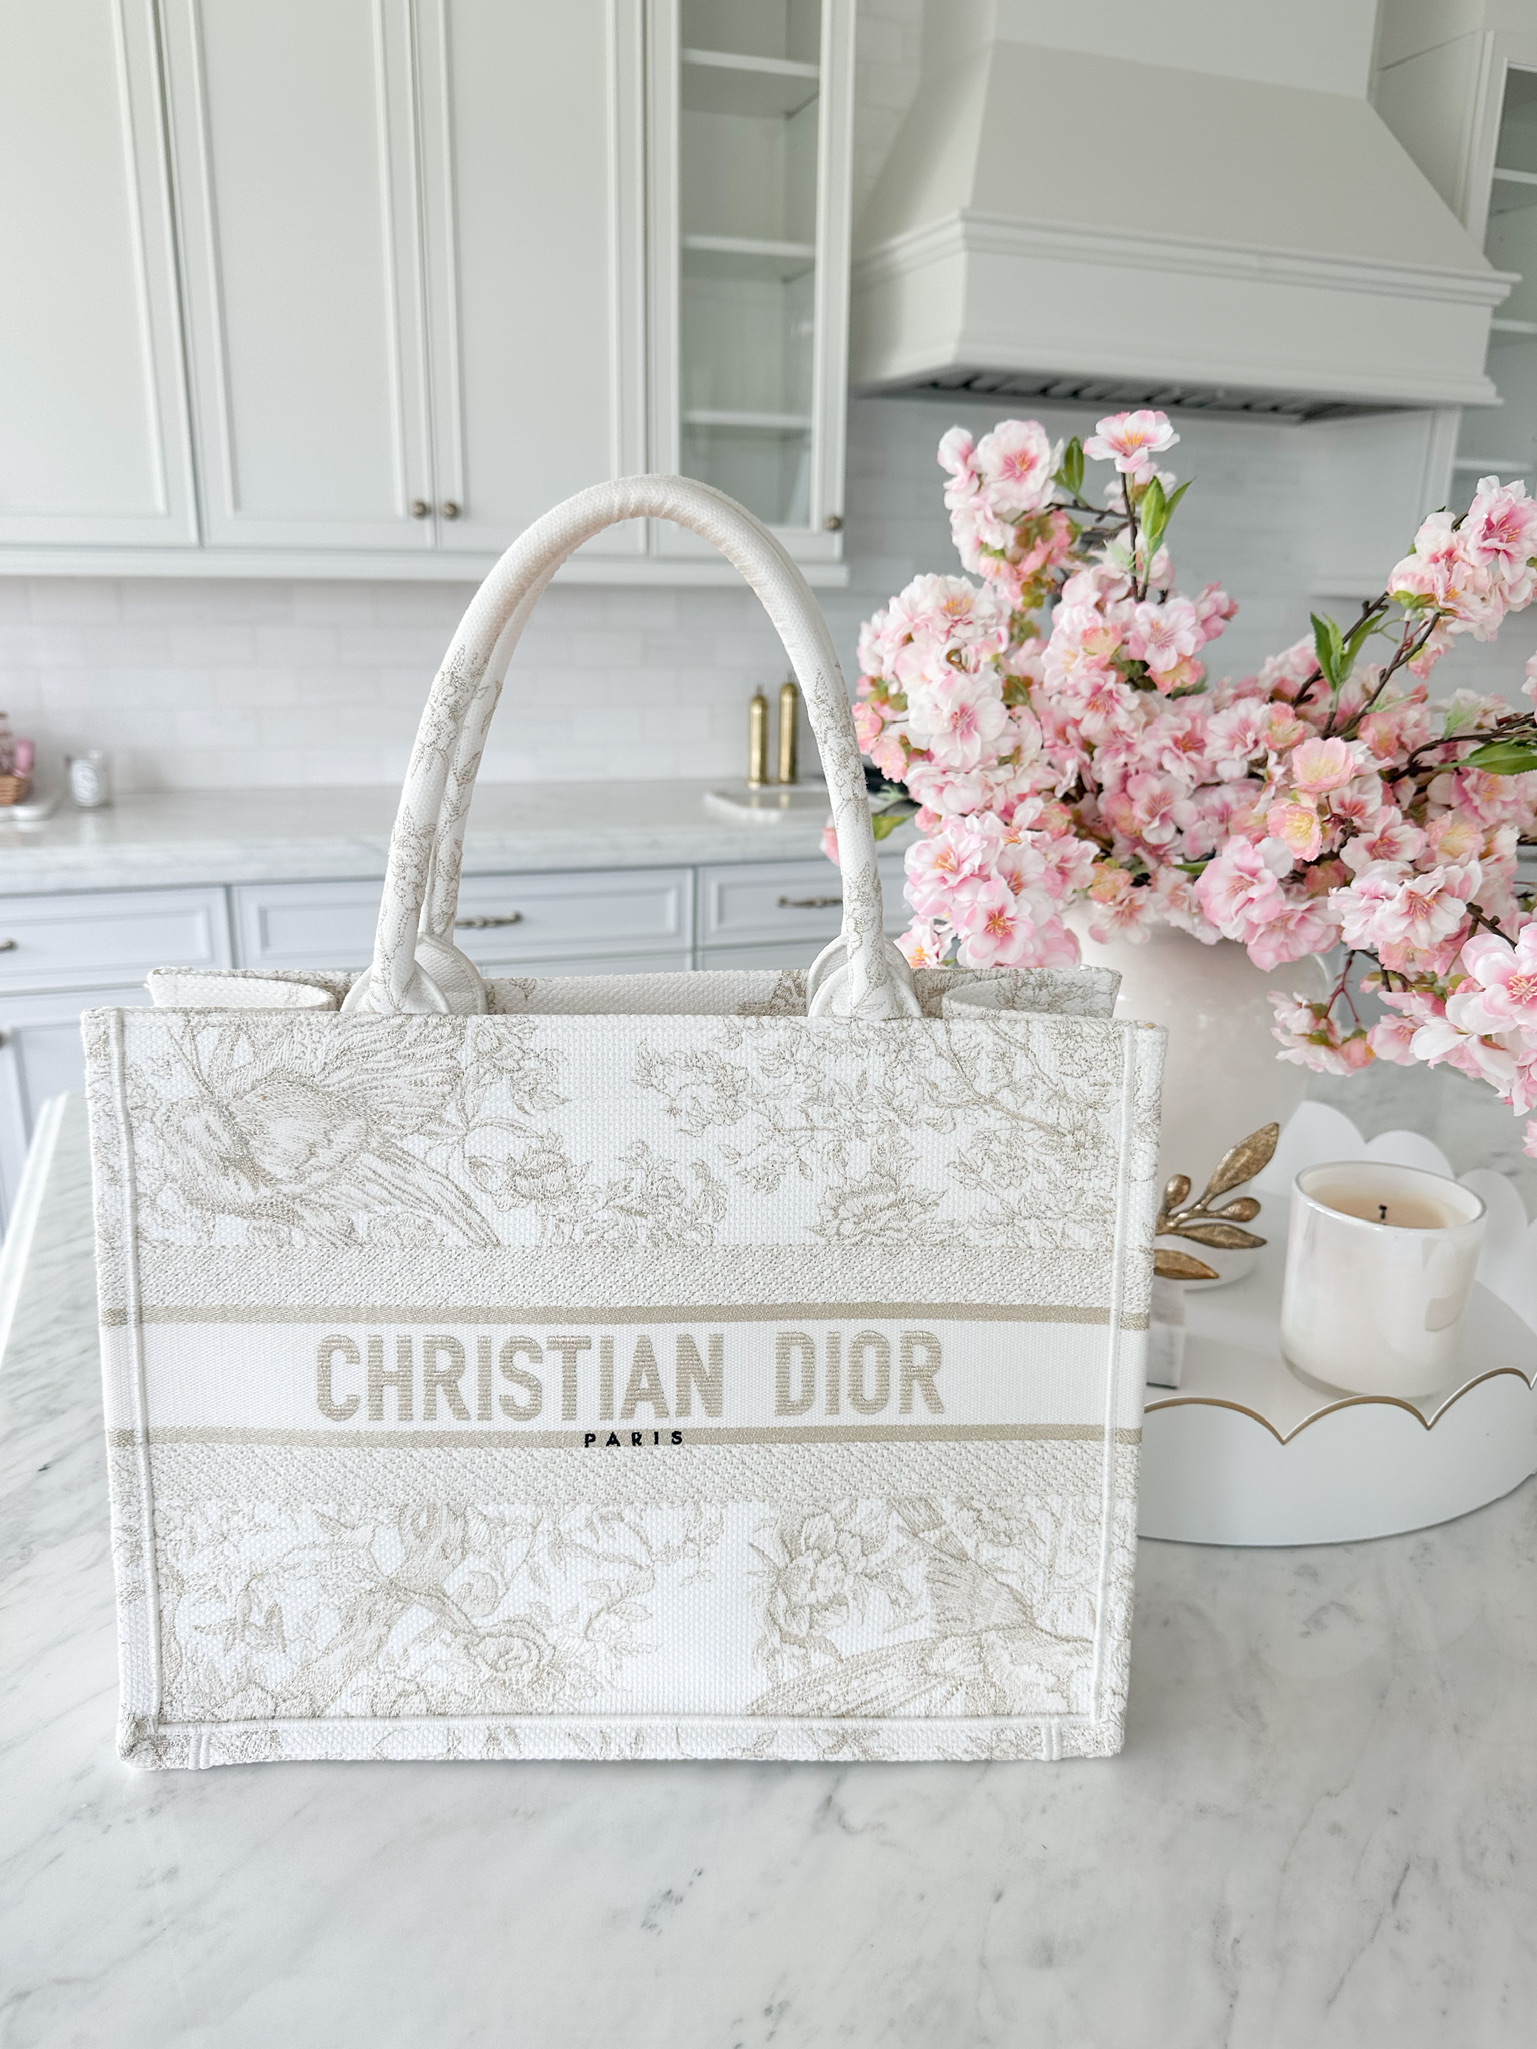 Christian Dior Dior Dior Book Tote